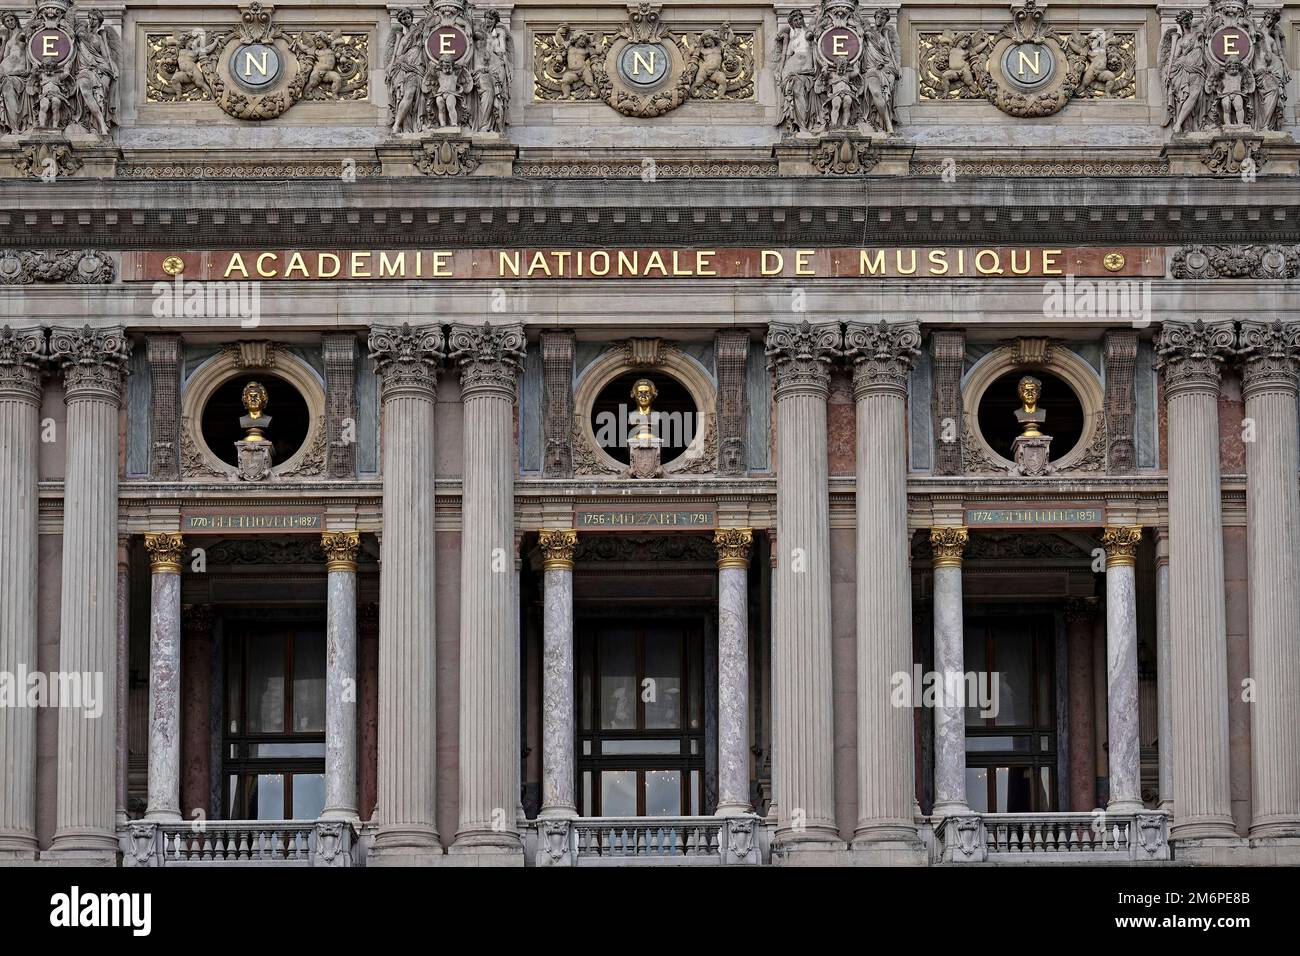 France, Paris, Opera de Paris, Opera National de Paris, Academie Nationale de Musique, Palais Garnier   Photo © Fabio Mazzarella/Sintesi/Alamy Stock P Stock Photo